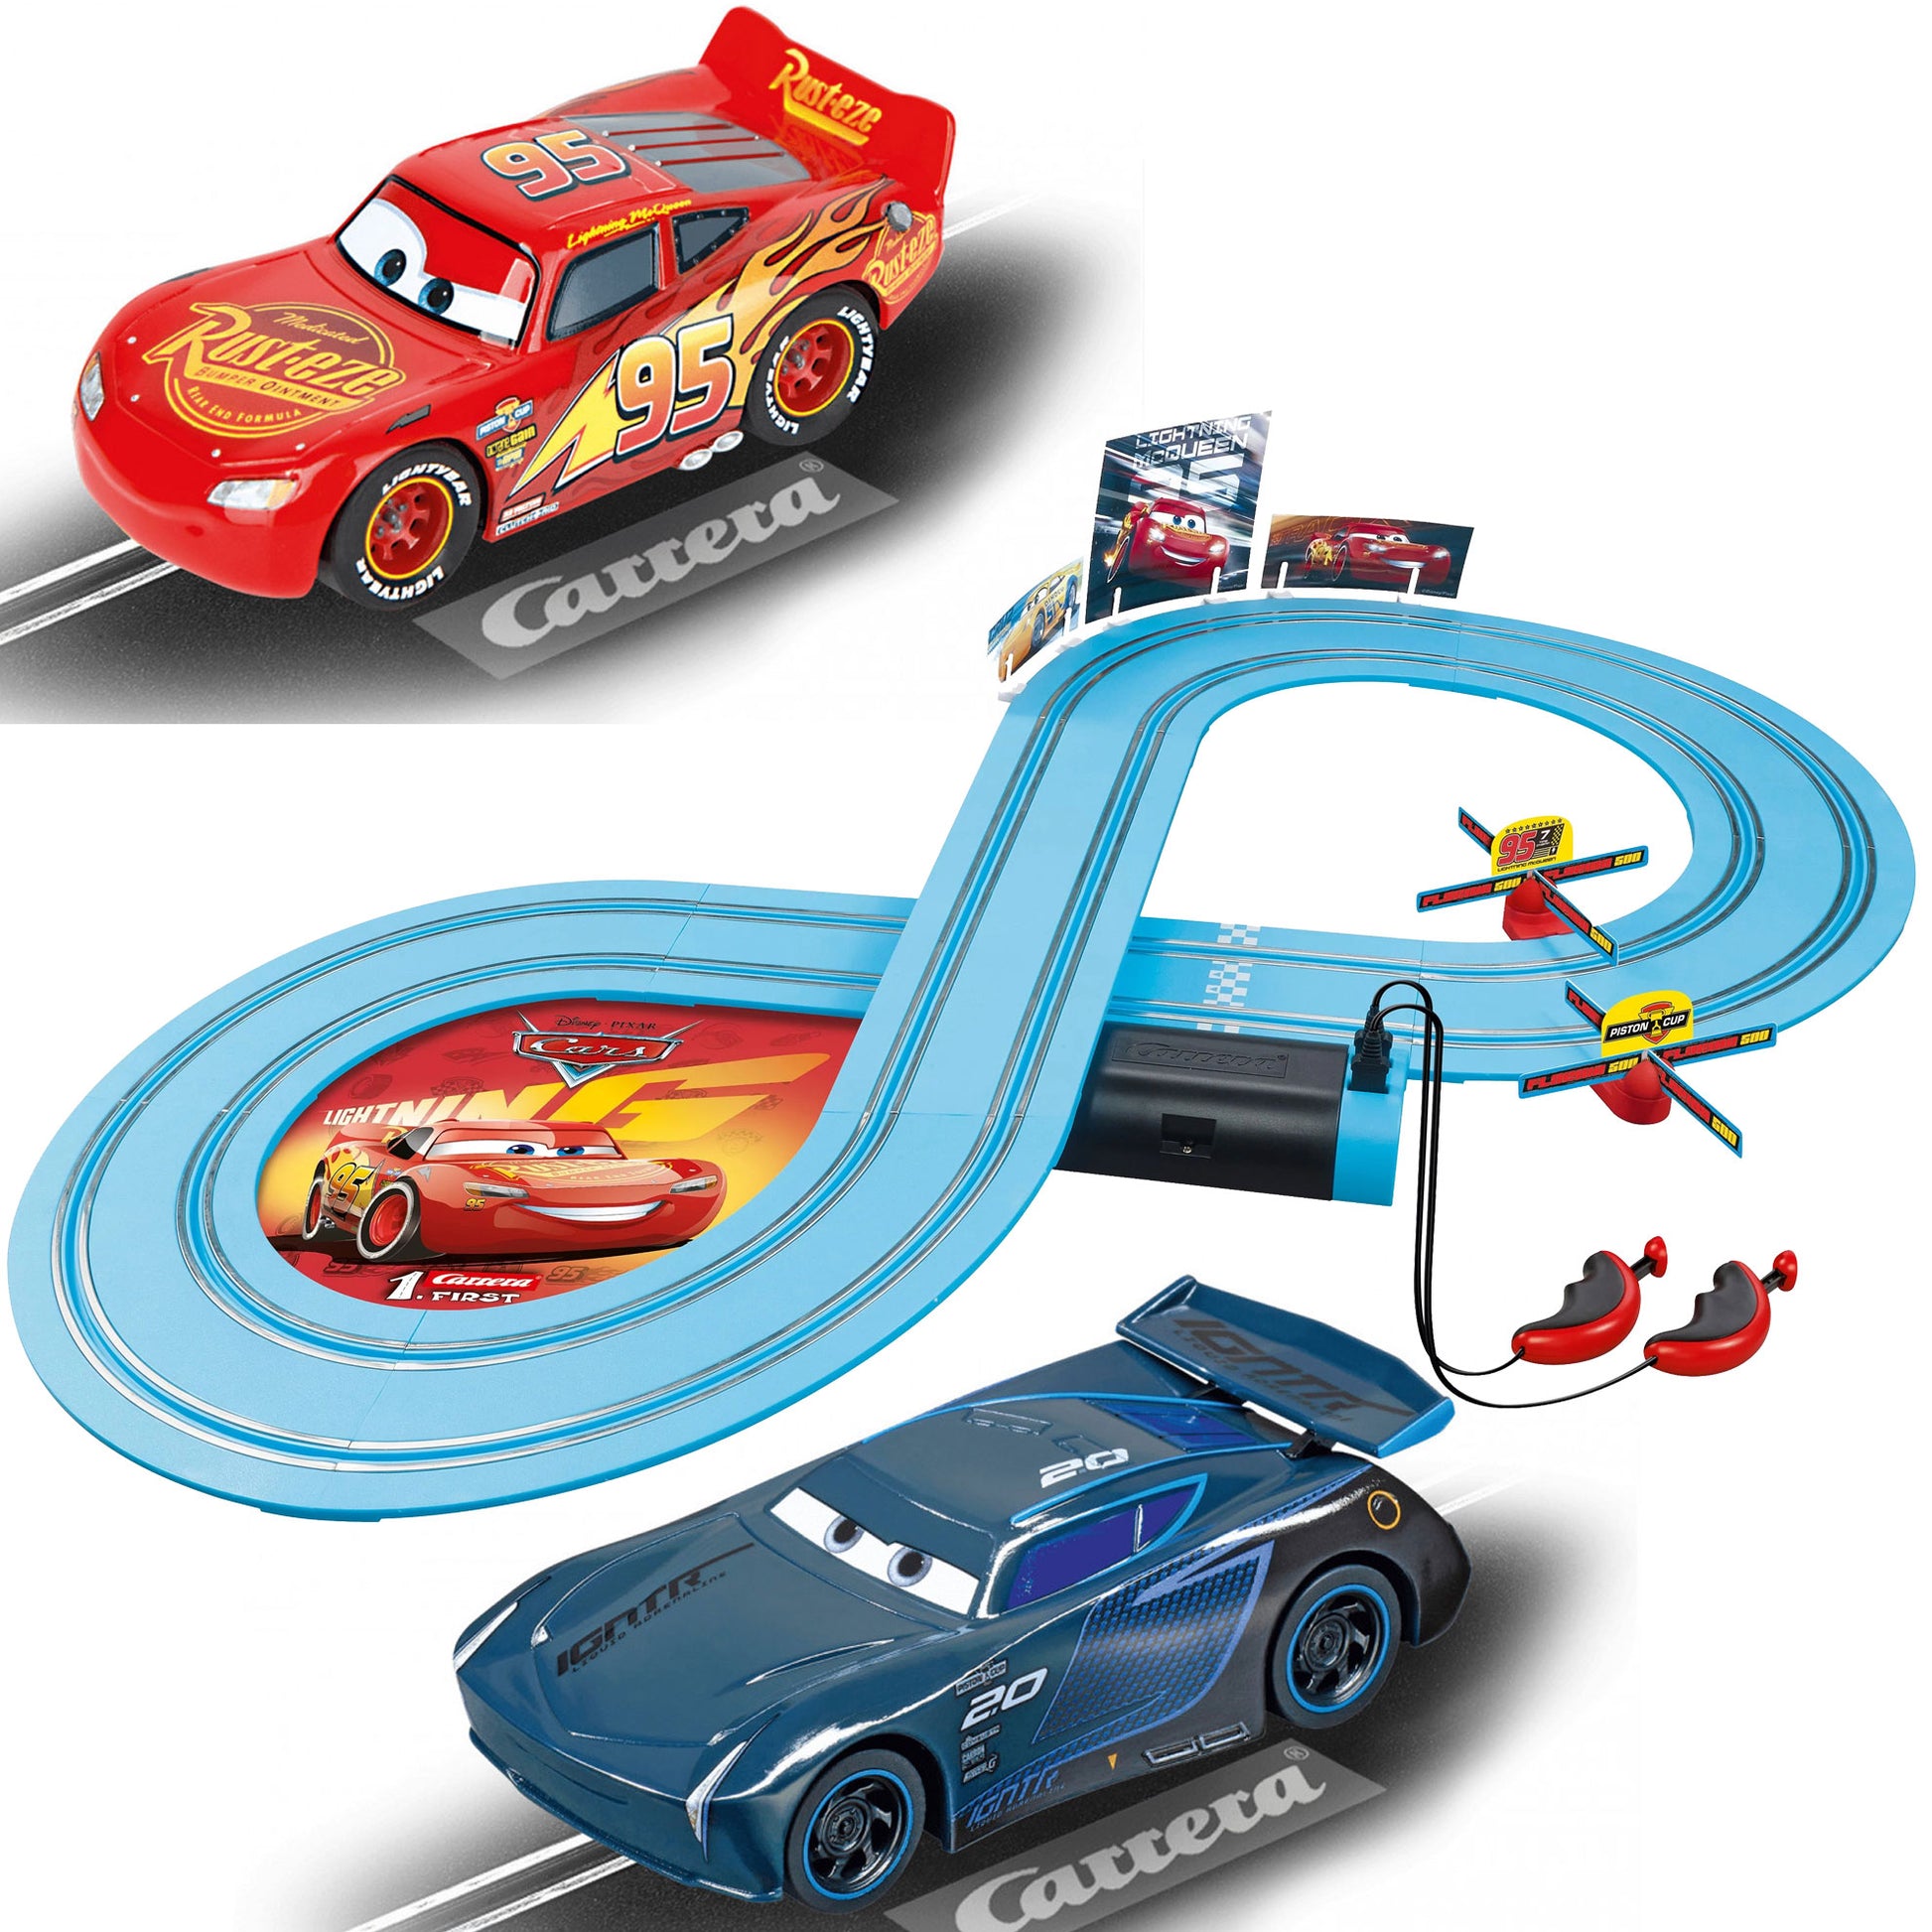 Carrera Slot Car Racing System Disney-Pixar Cars Piston Cup